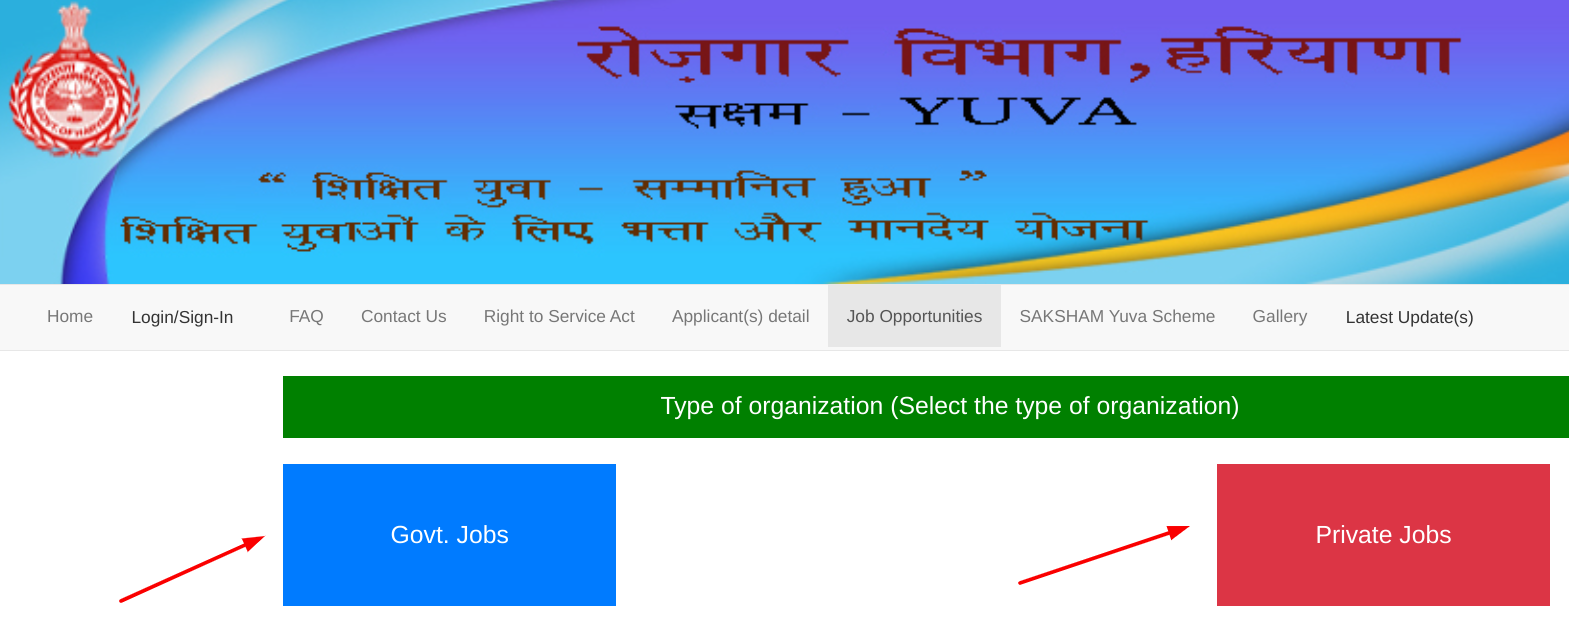 haryana kaushal rozgar nigam - choosing job type from skaksham yuva website